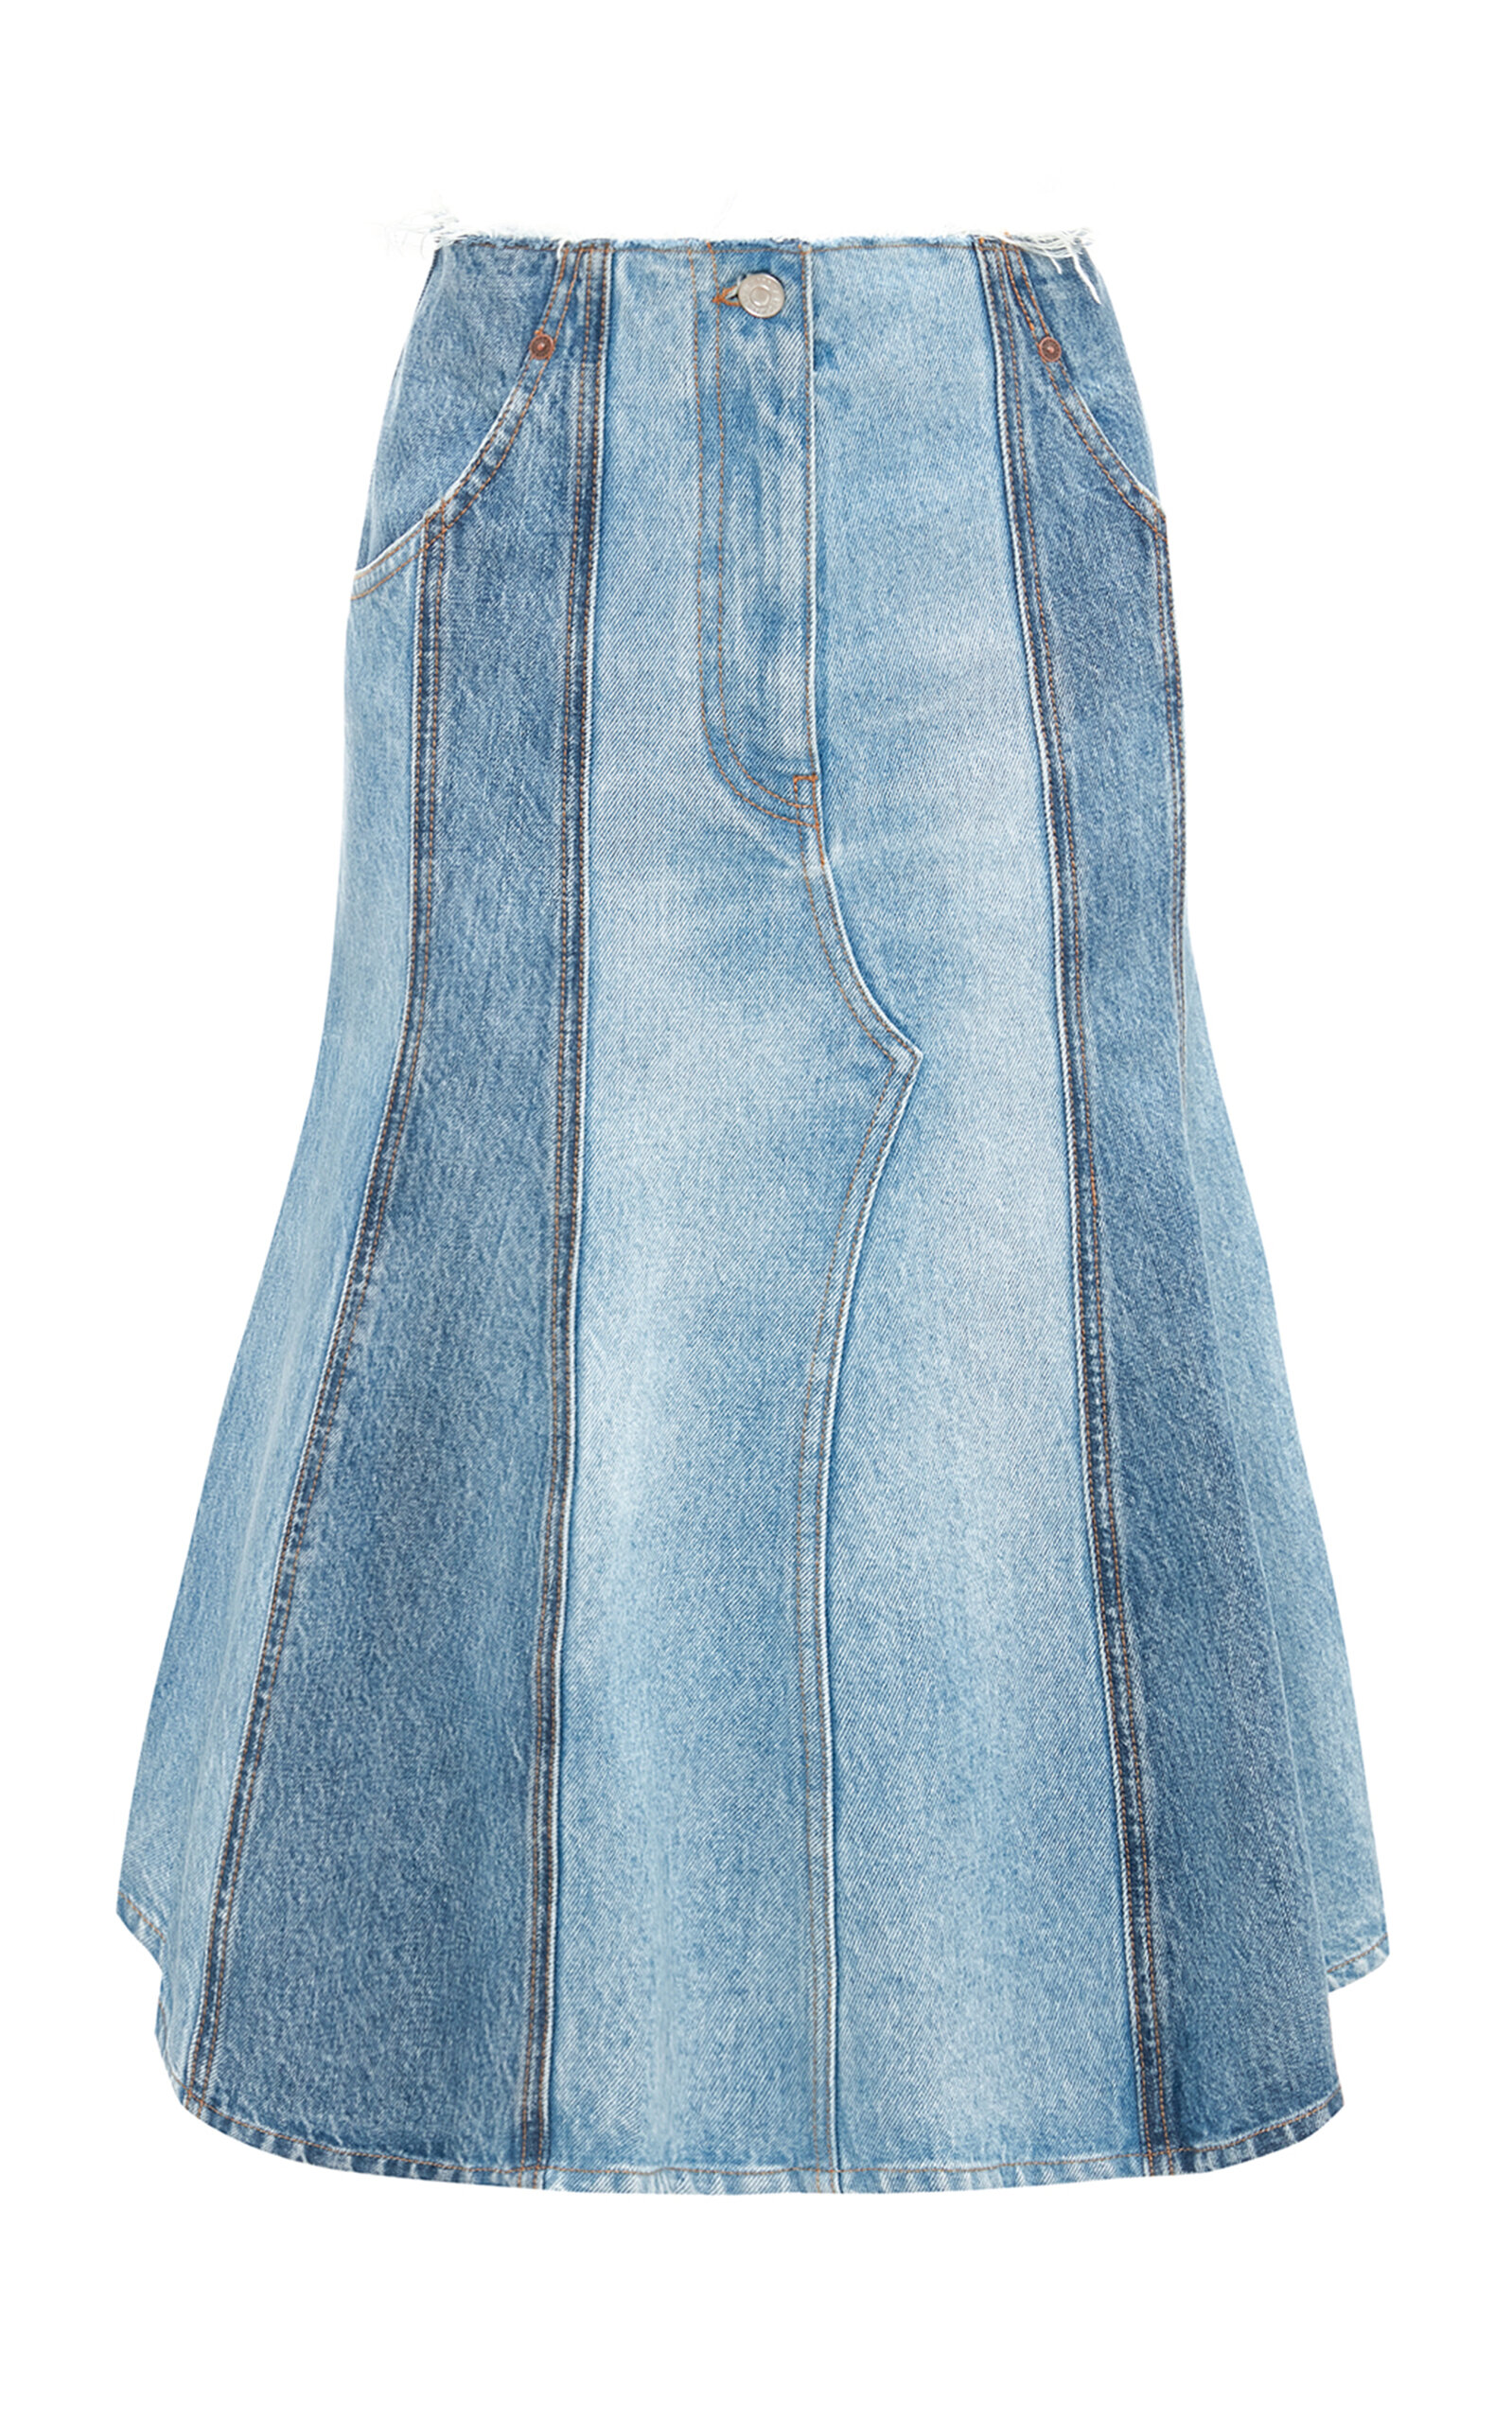 Victoria Beckham Women's Deconstructed Denim Midi Skirt